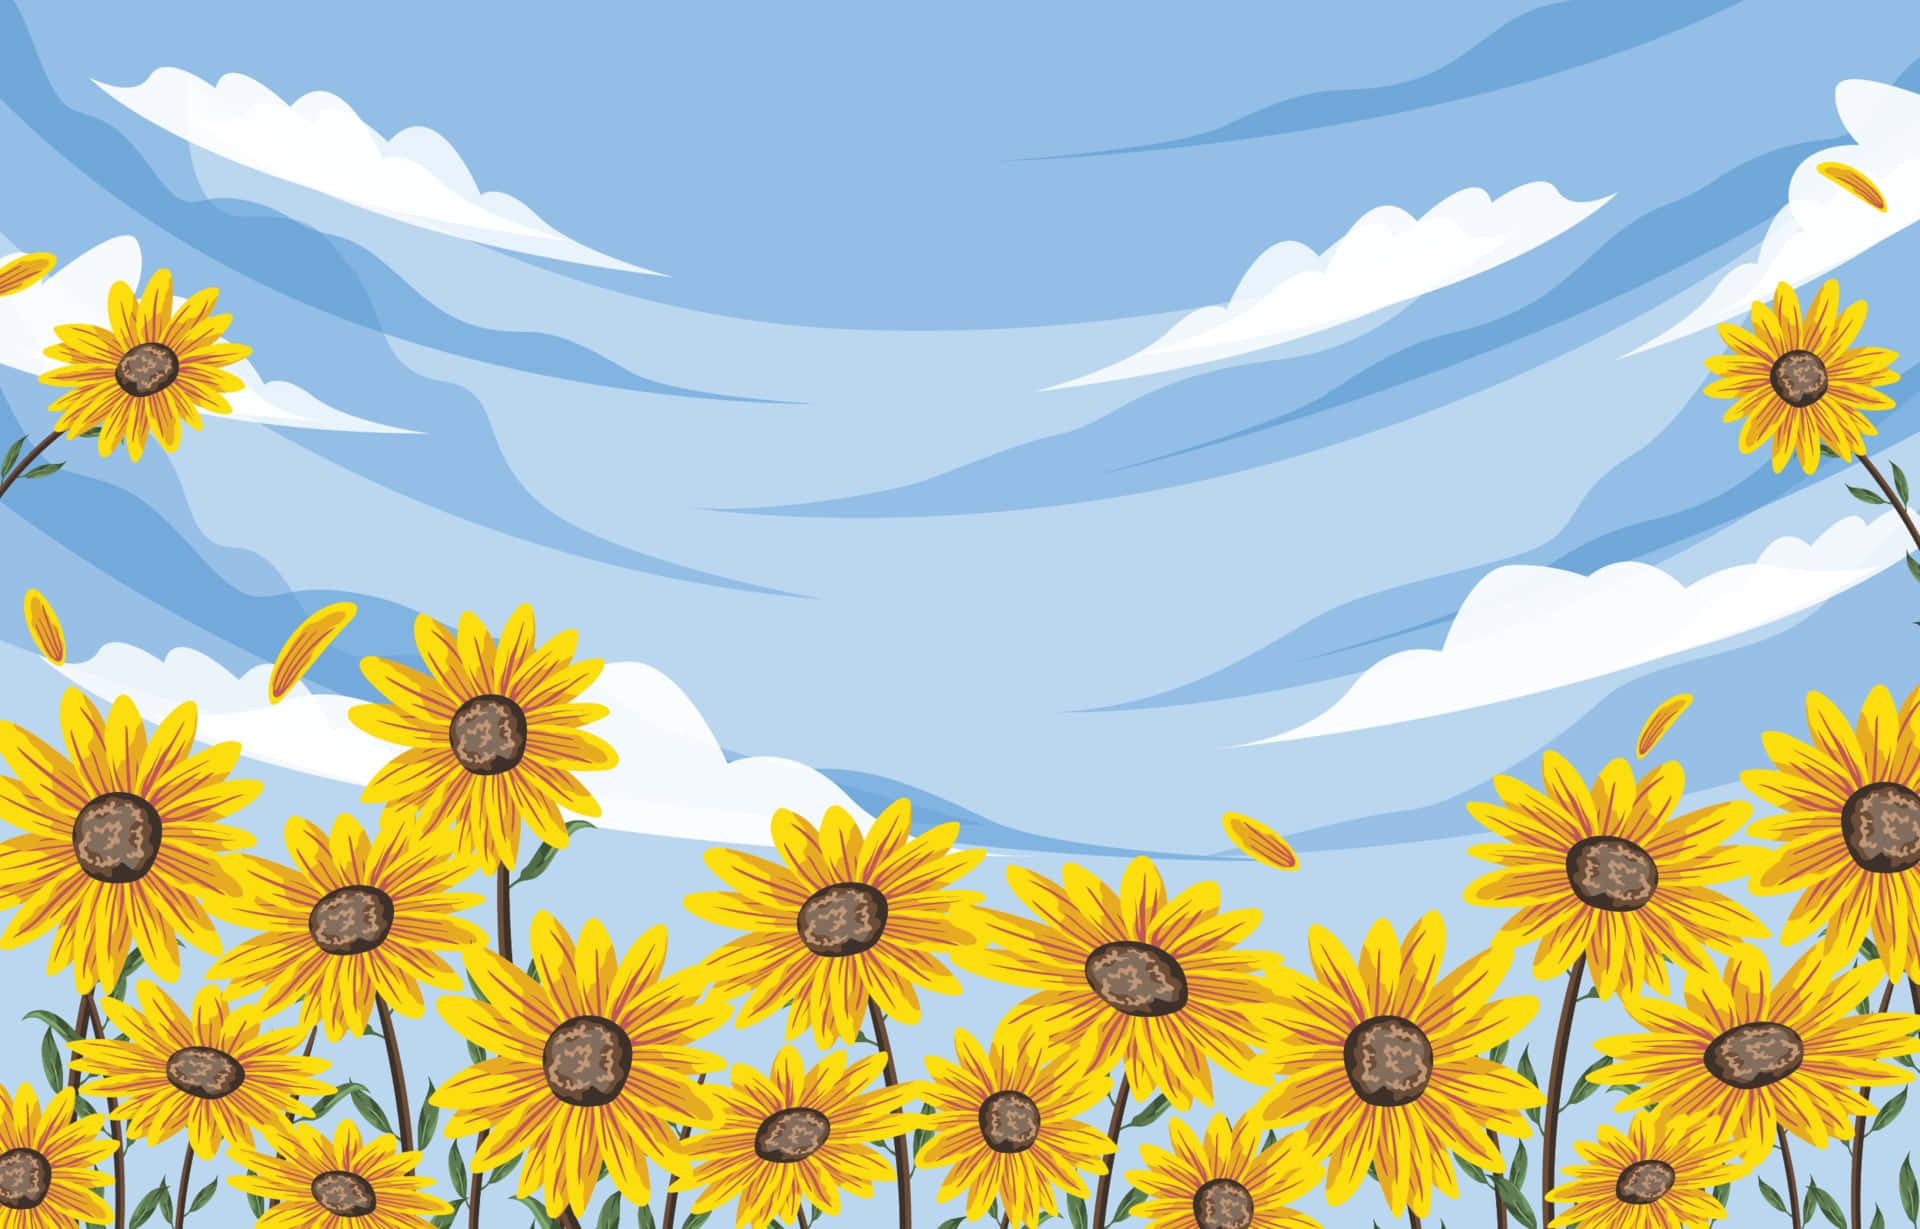 "A Field of Sunflowers Illuminated by Warm Sunshine"